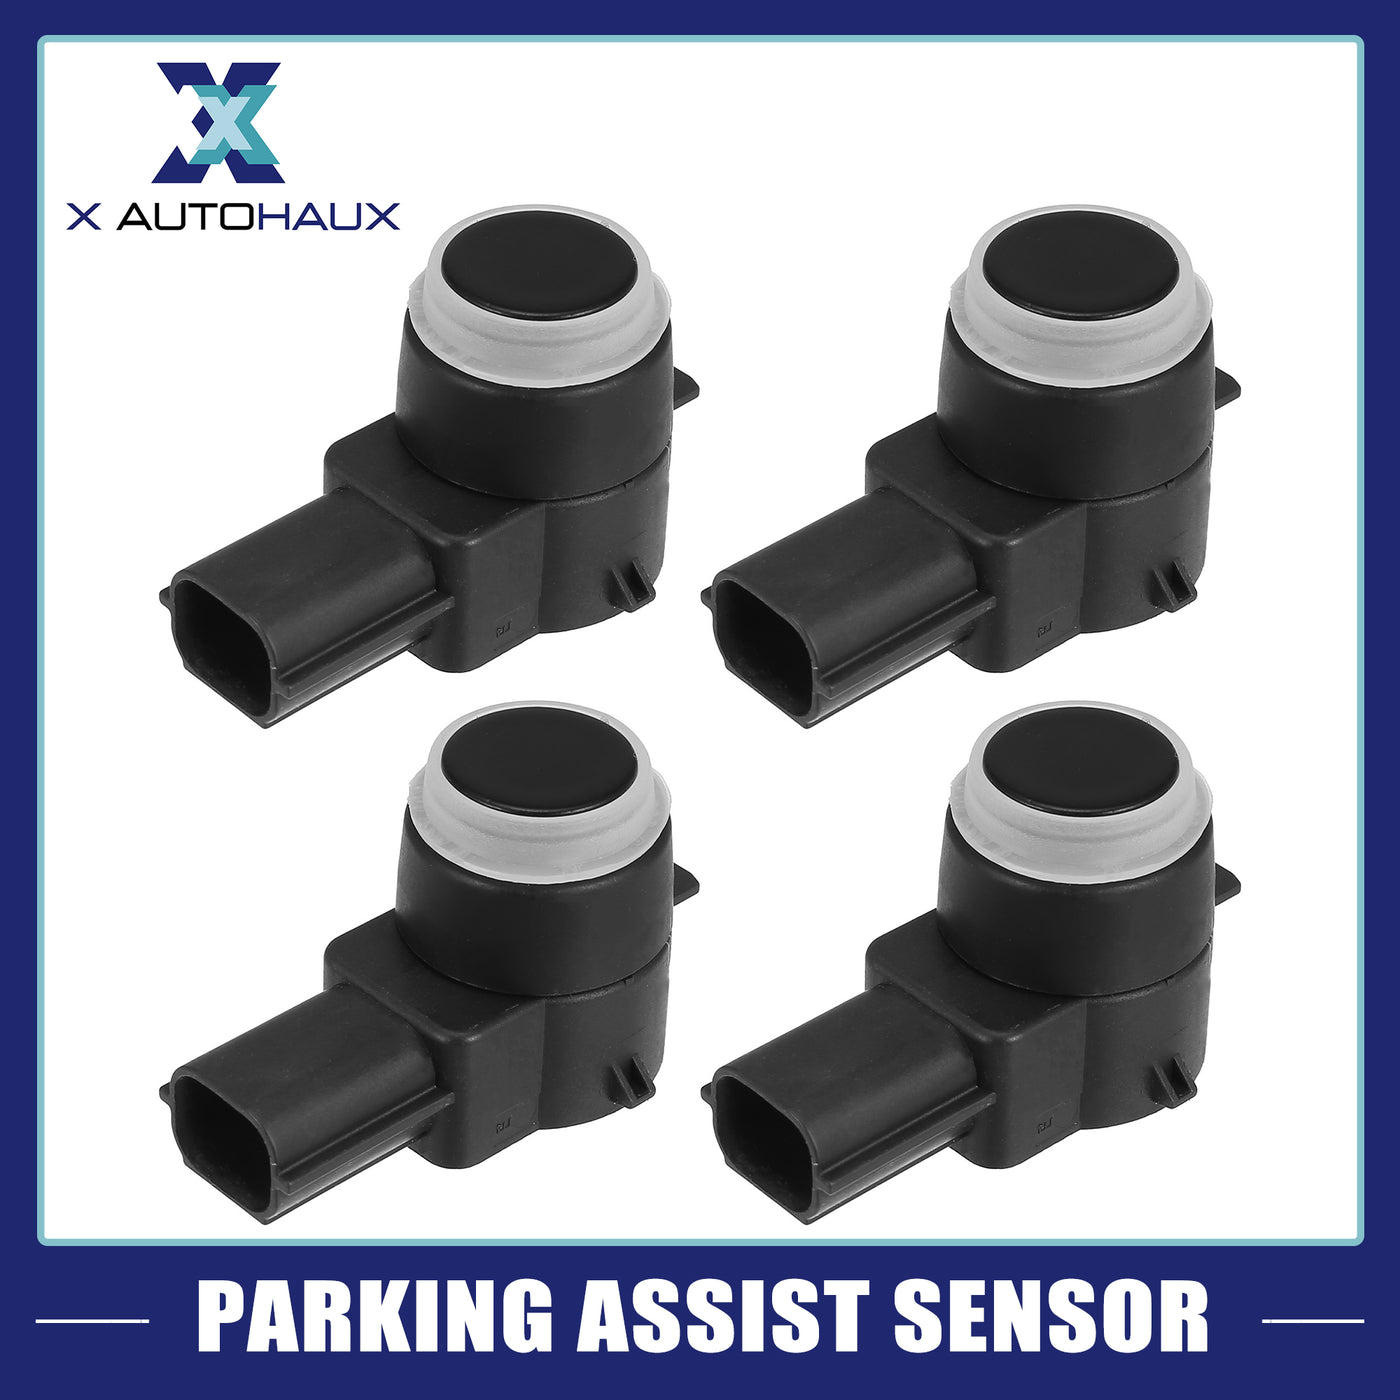 X AUTOHAUX 4pcs PDC Parking Assist Sensor Reverse Backup Parking Sensor for Dodge Journey for Ram 1500 2500 3500 for Jeep for Chrysler 1EW63TZZAA